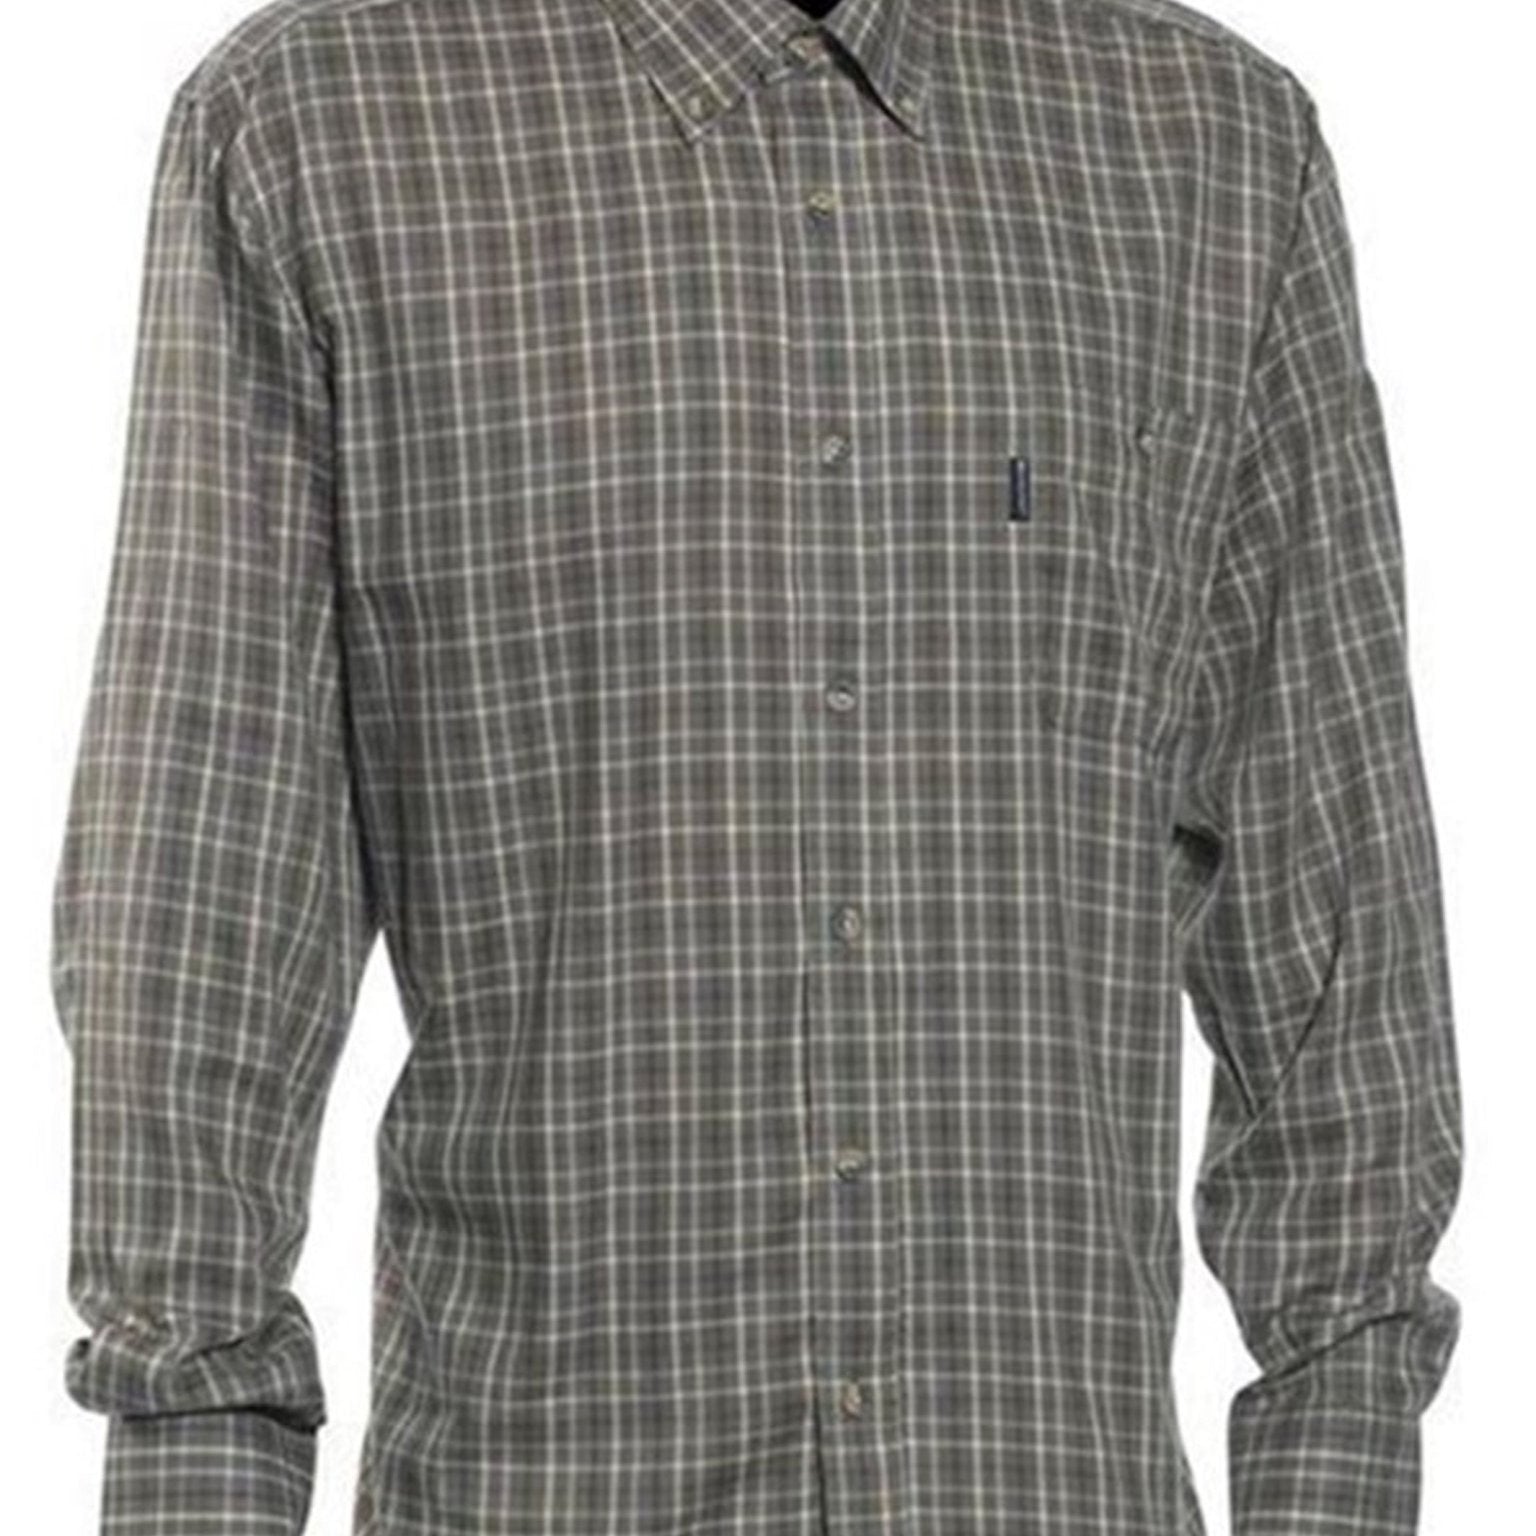 4elementsclothingDeerhunterDeerhunter - Waylon Mens Long Sleeve shirt / Mens Check Shirt / Country Mens ShirtShirt8468-399-3536